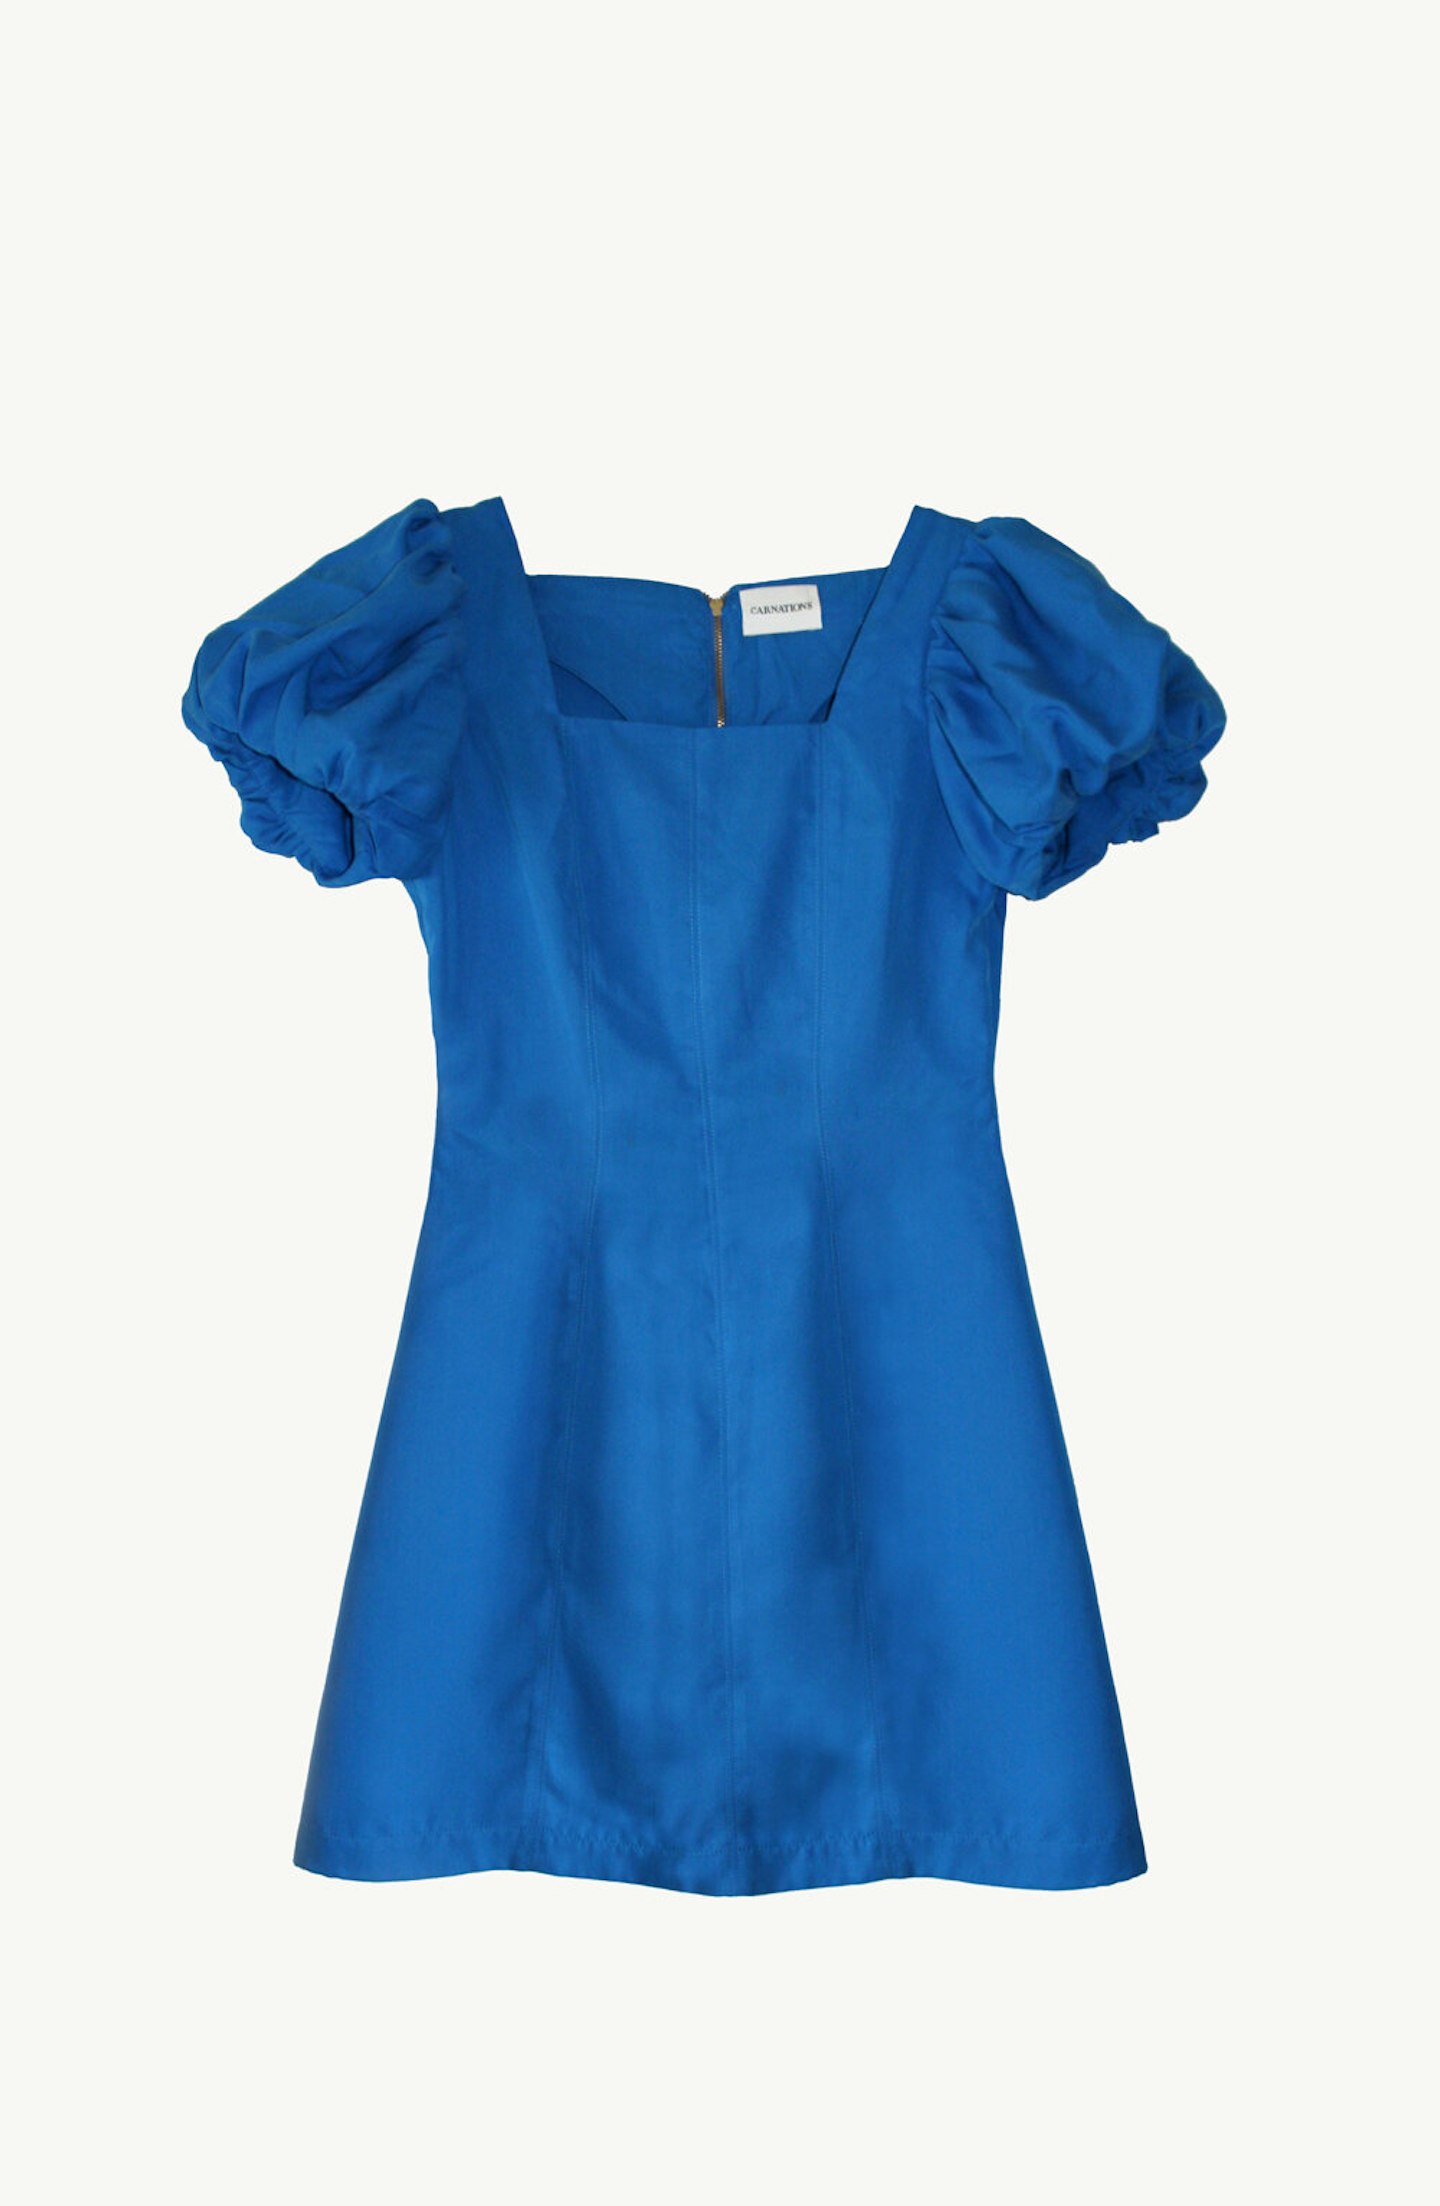 Carnations London, Puff Sleeve Sapphire Dress, £185